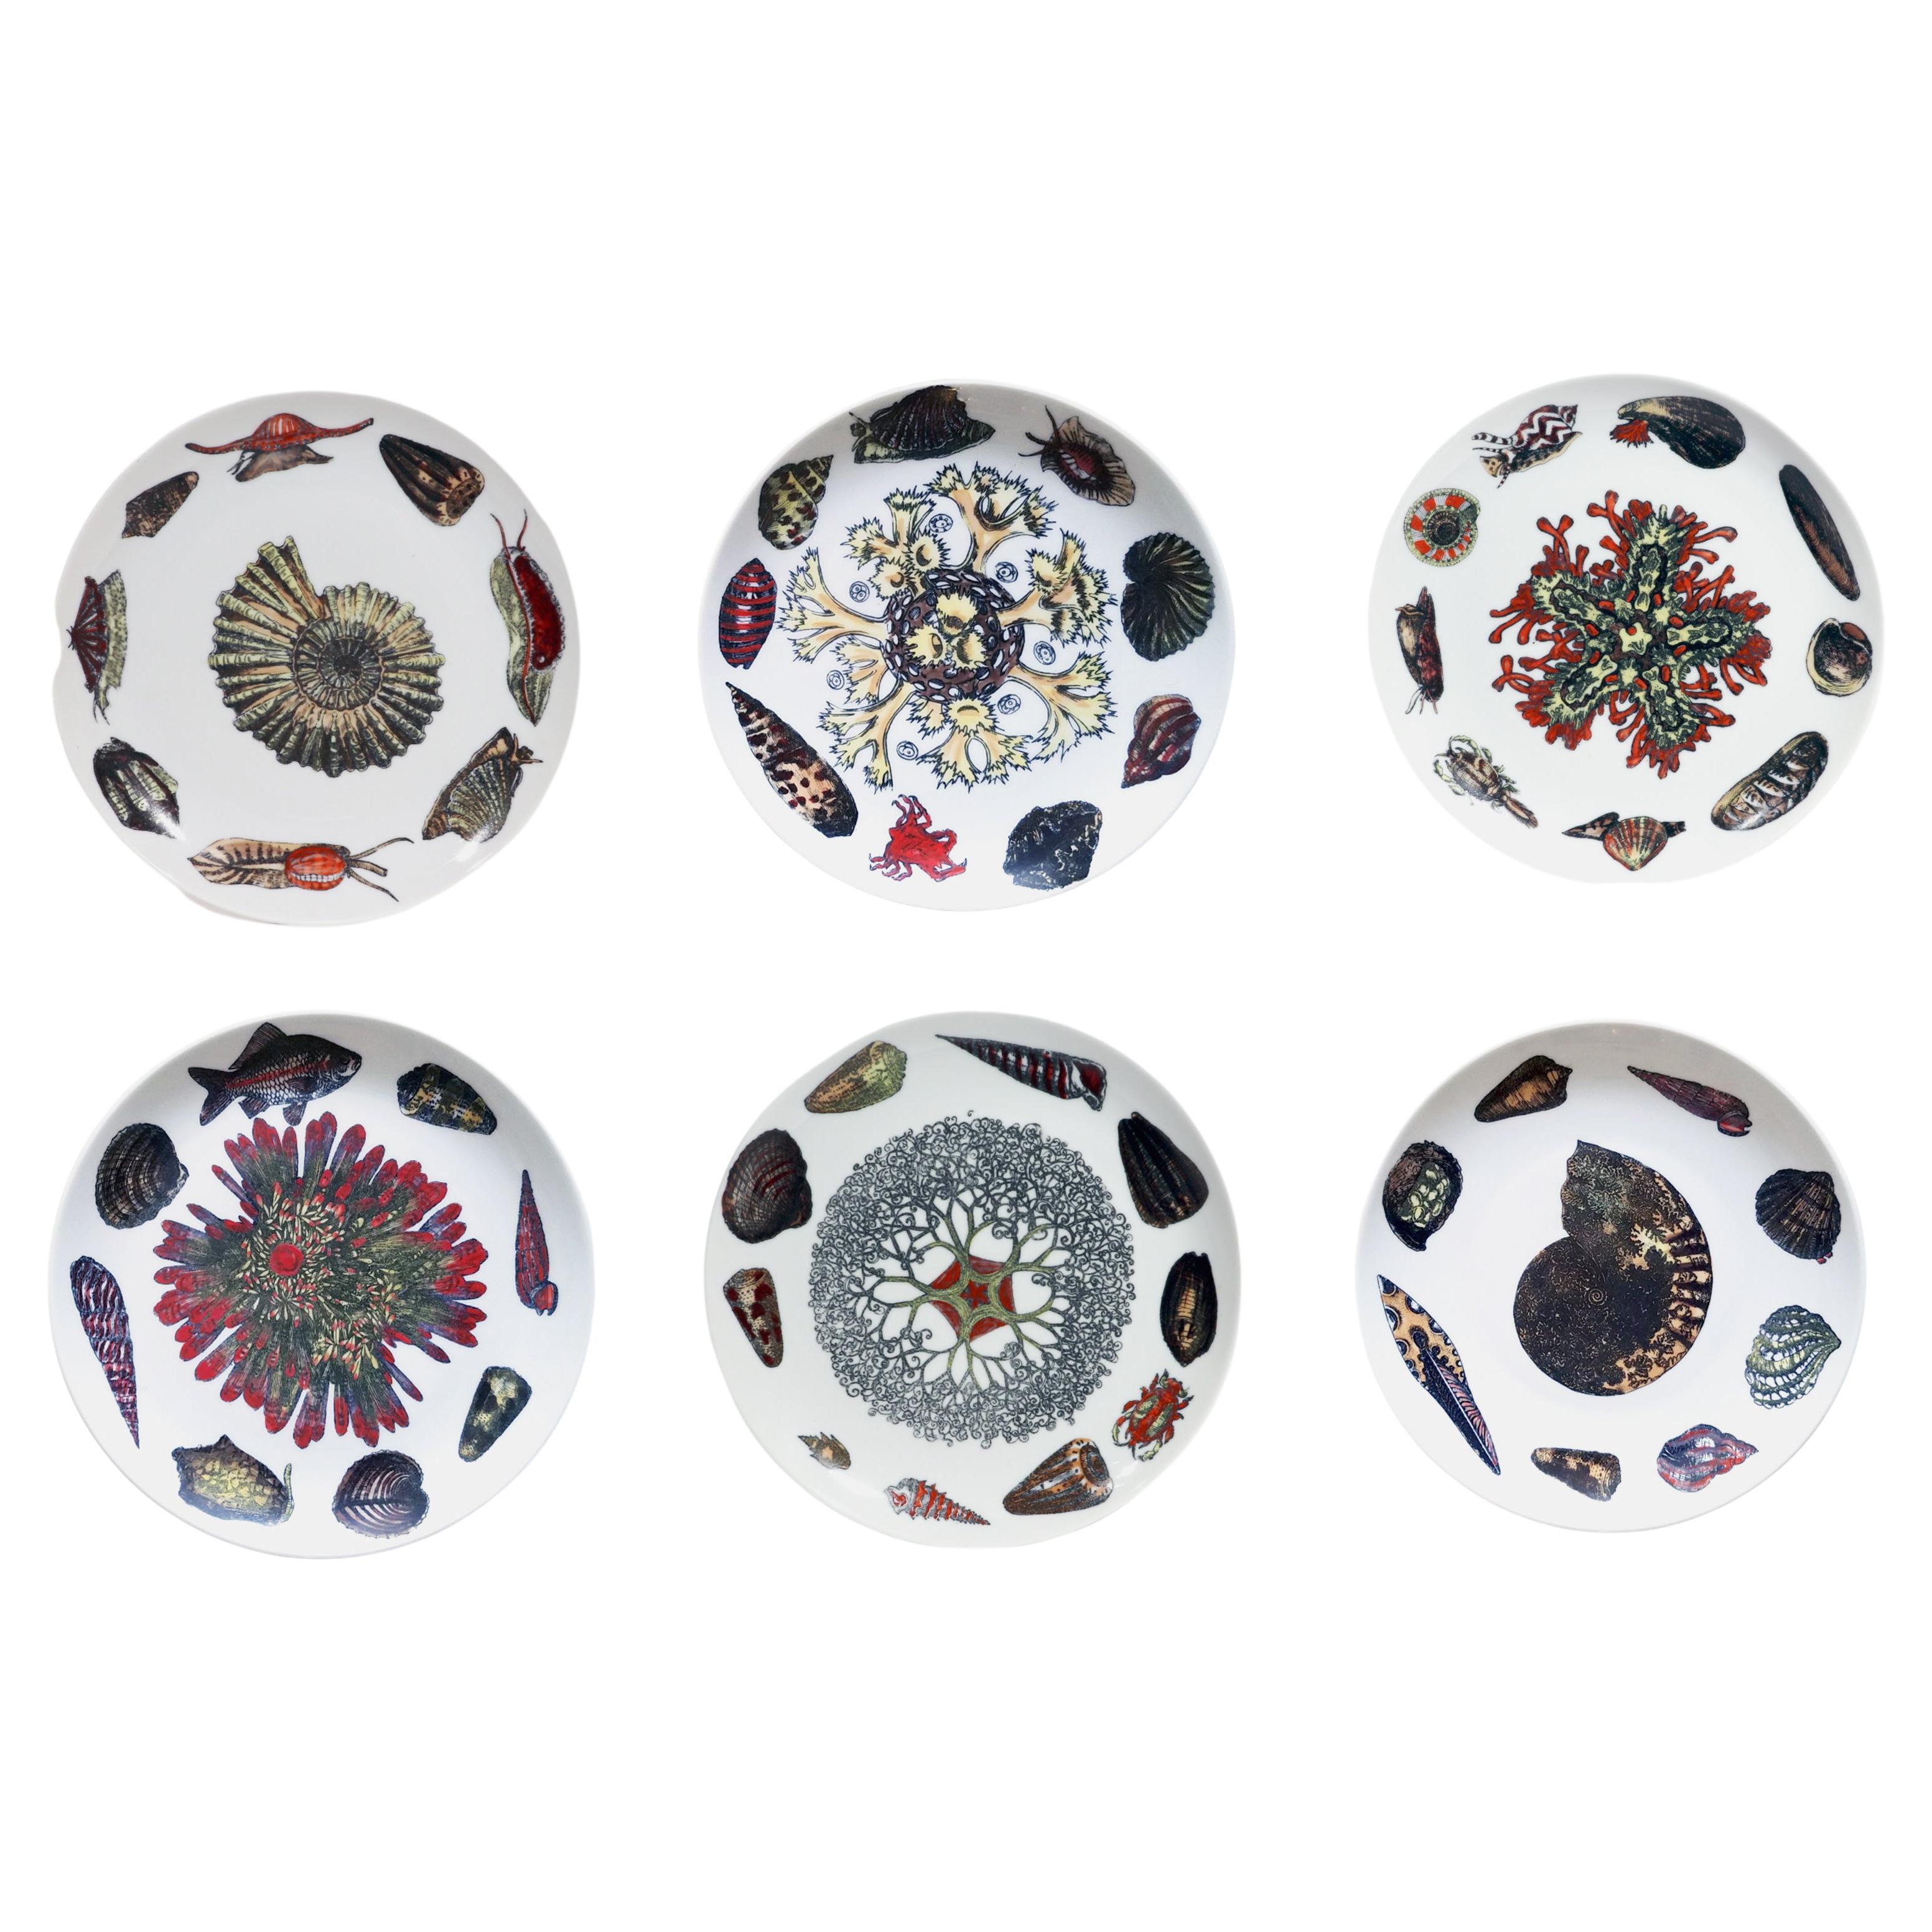 Piero Fornasetti Porcelain Conchiglie Seashell Set of Plates with Mollusks